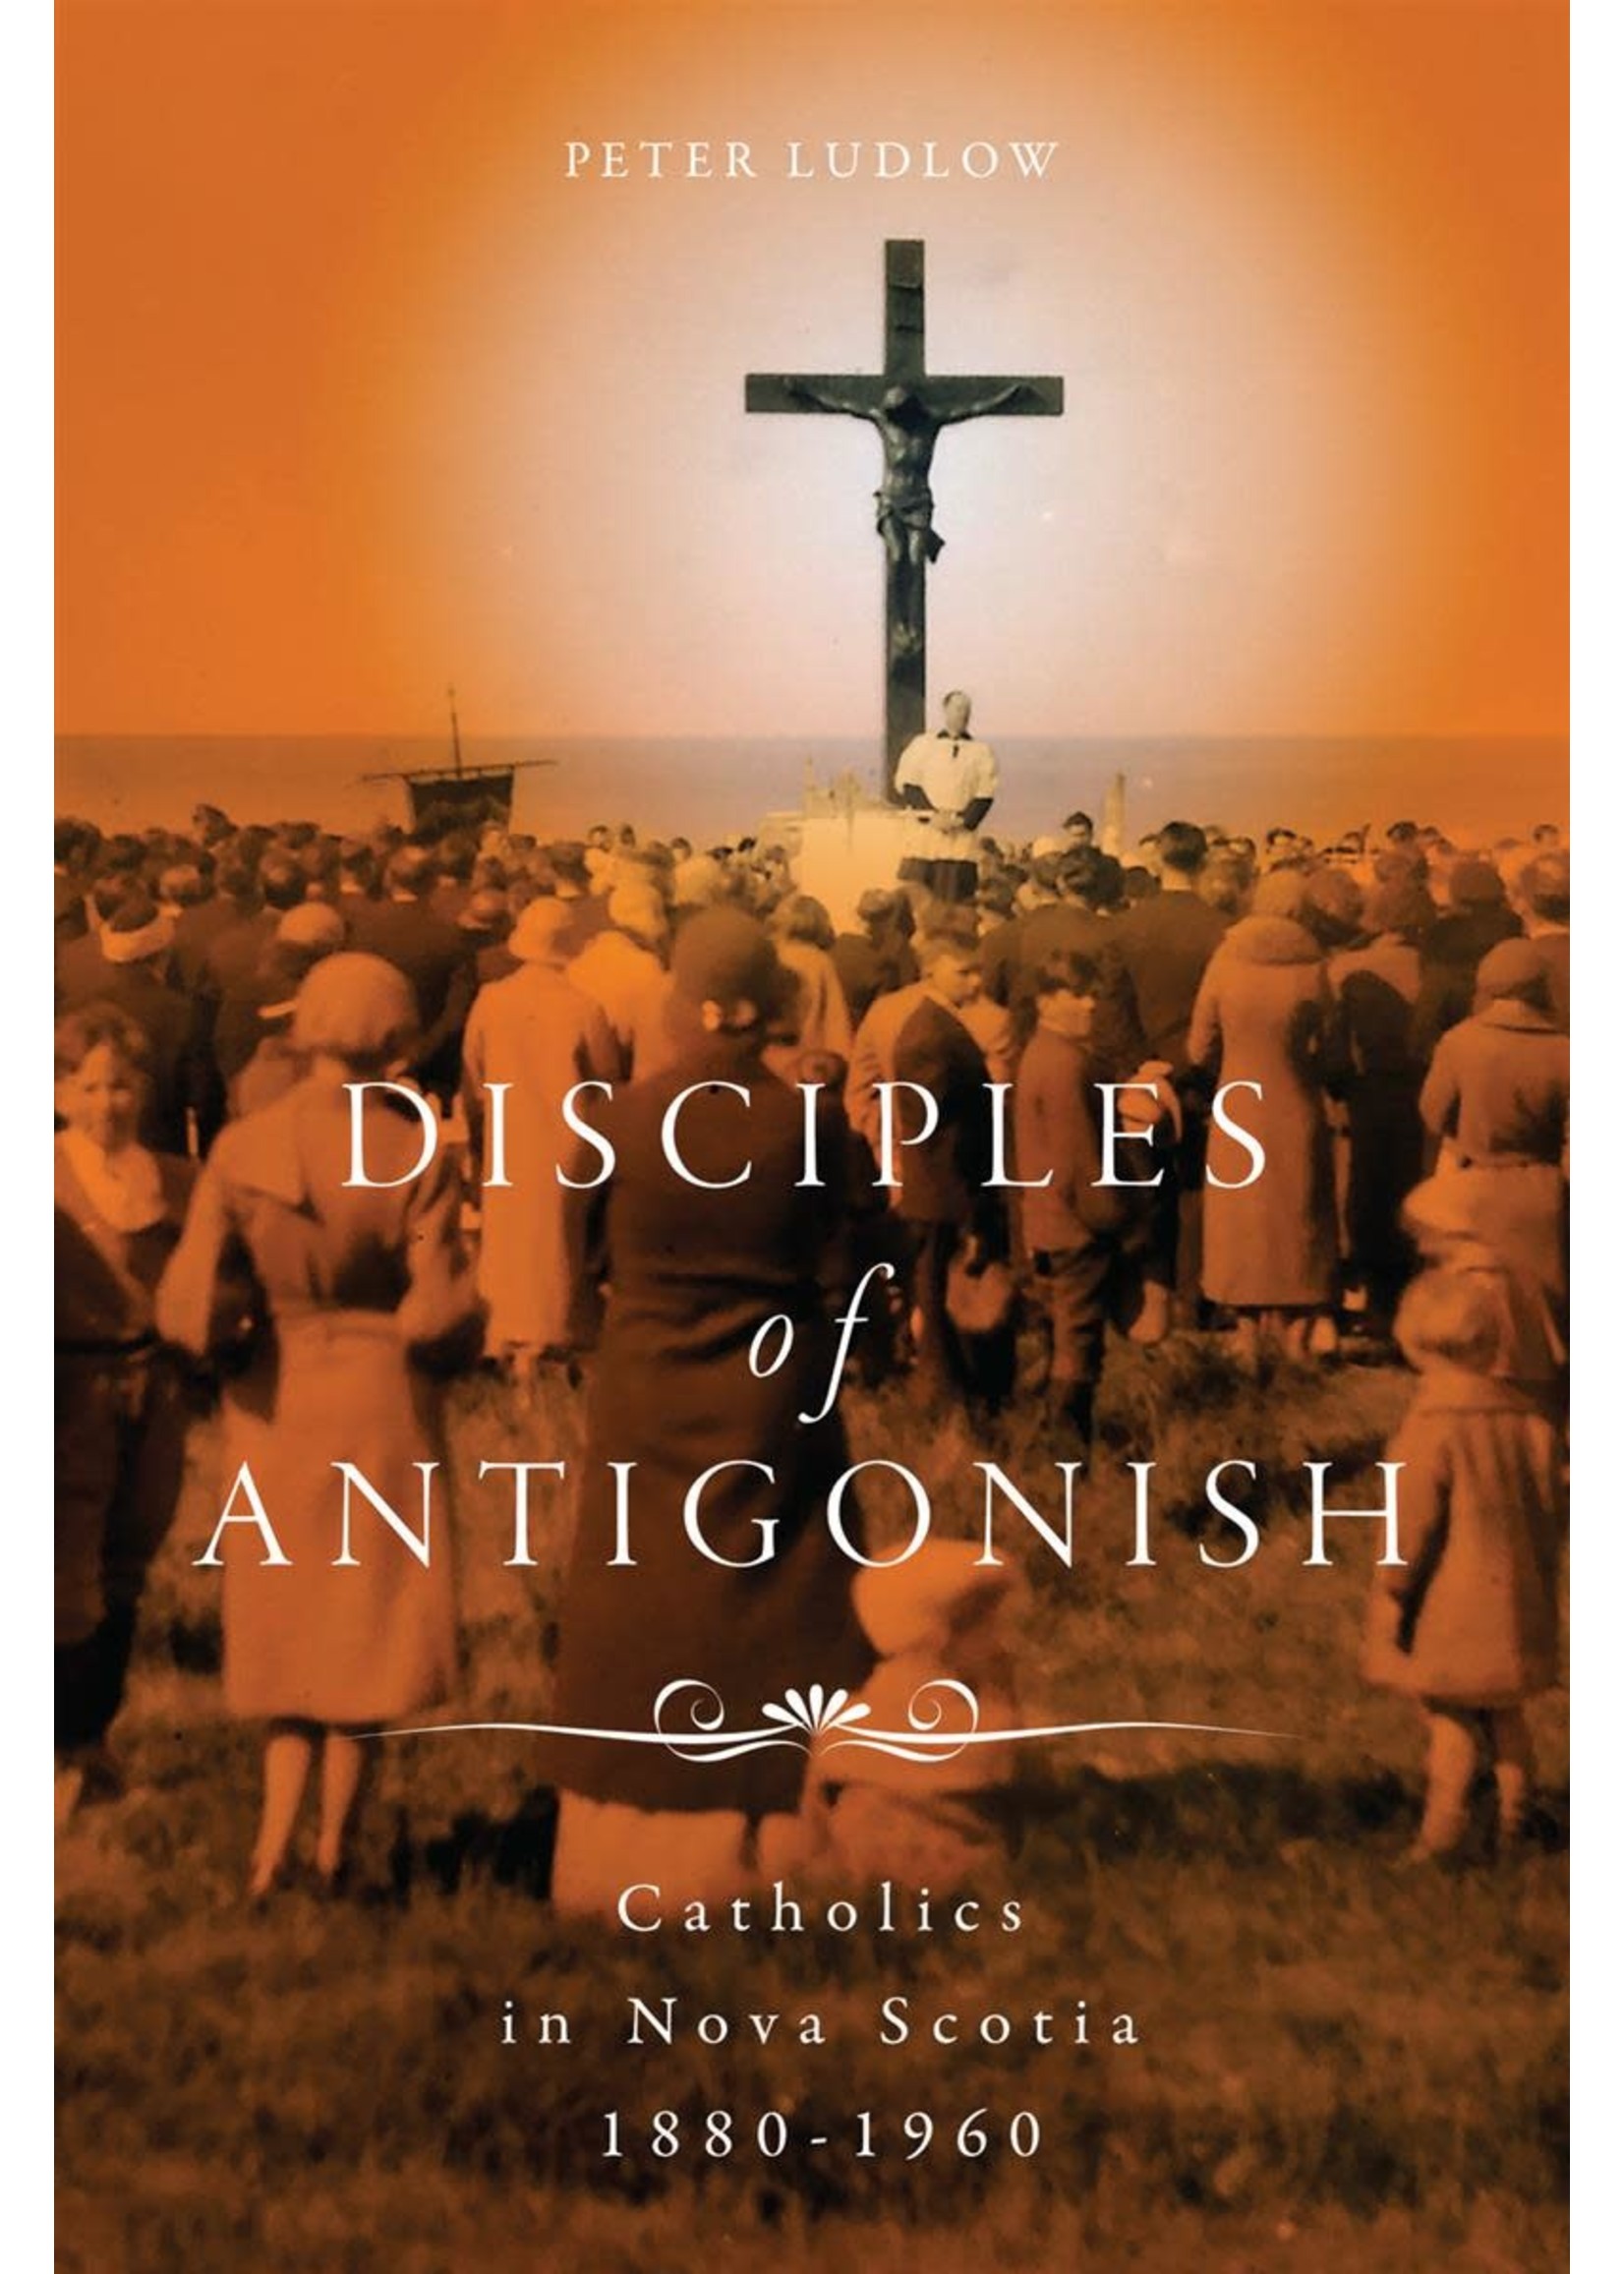 Disciples of Antigonish: Catholics in Nova Scotia, 1880-1960 by Peter Ludlow